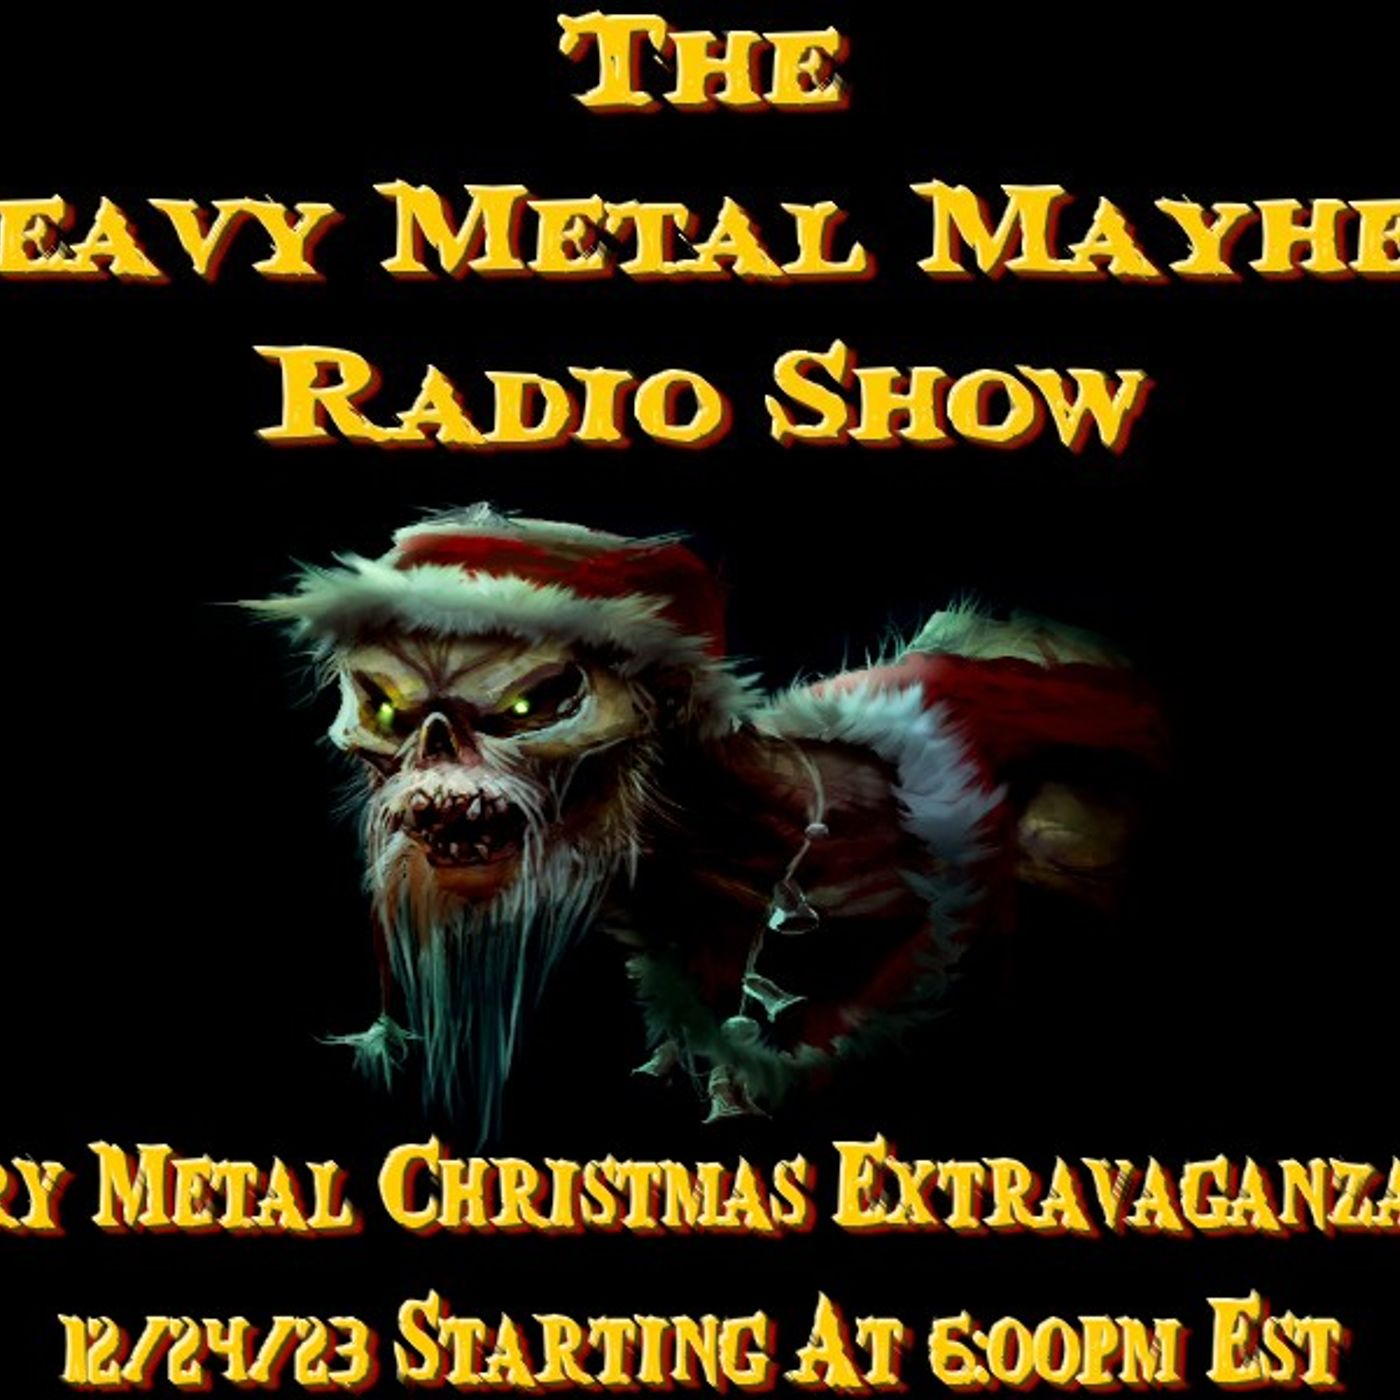 Heavy Metal Mayhem's "Merry Metal Christmas Extravaganza XIV' 12/24/23